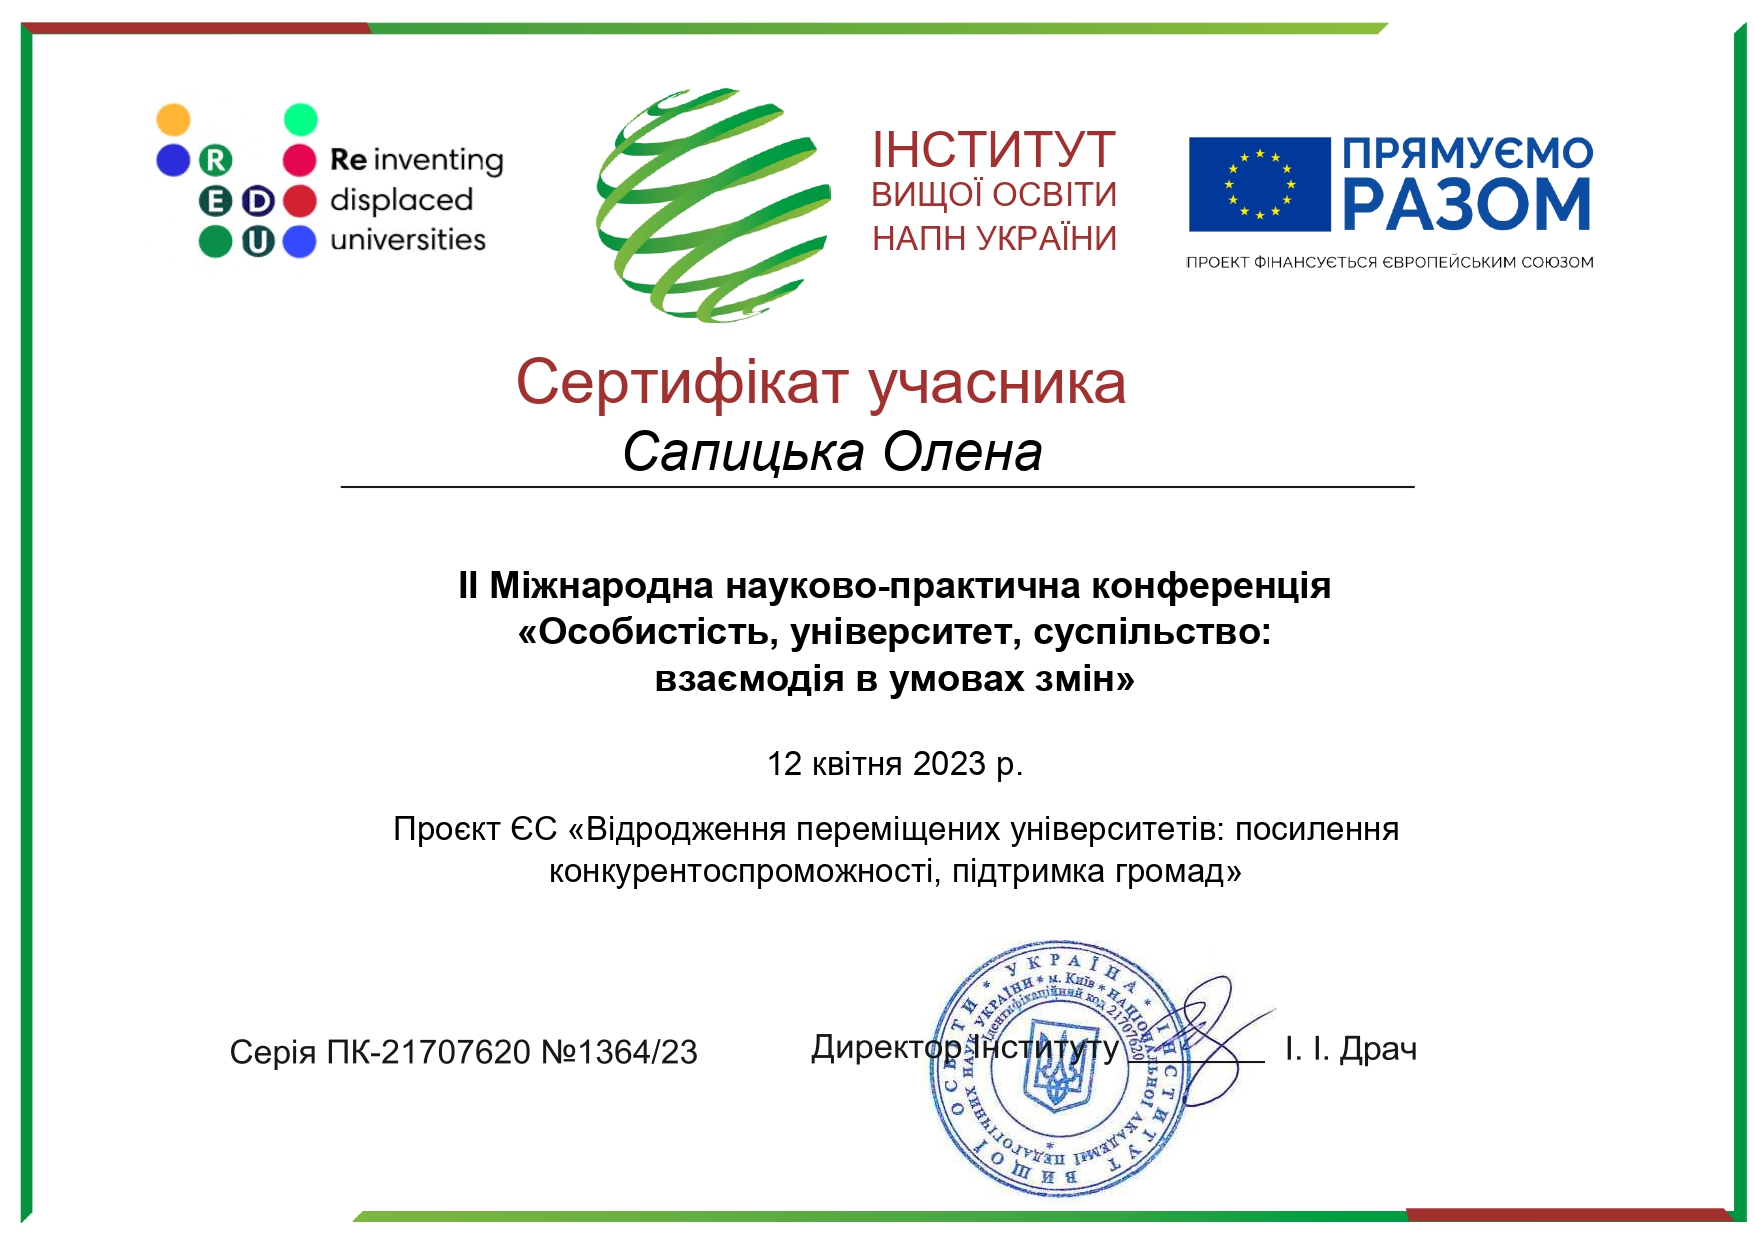 Сапицька Олена_сертифікат_page-0001.jpg